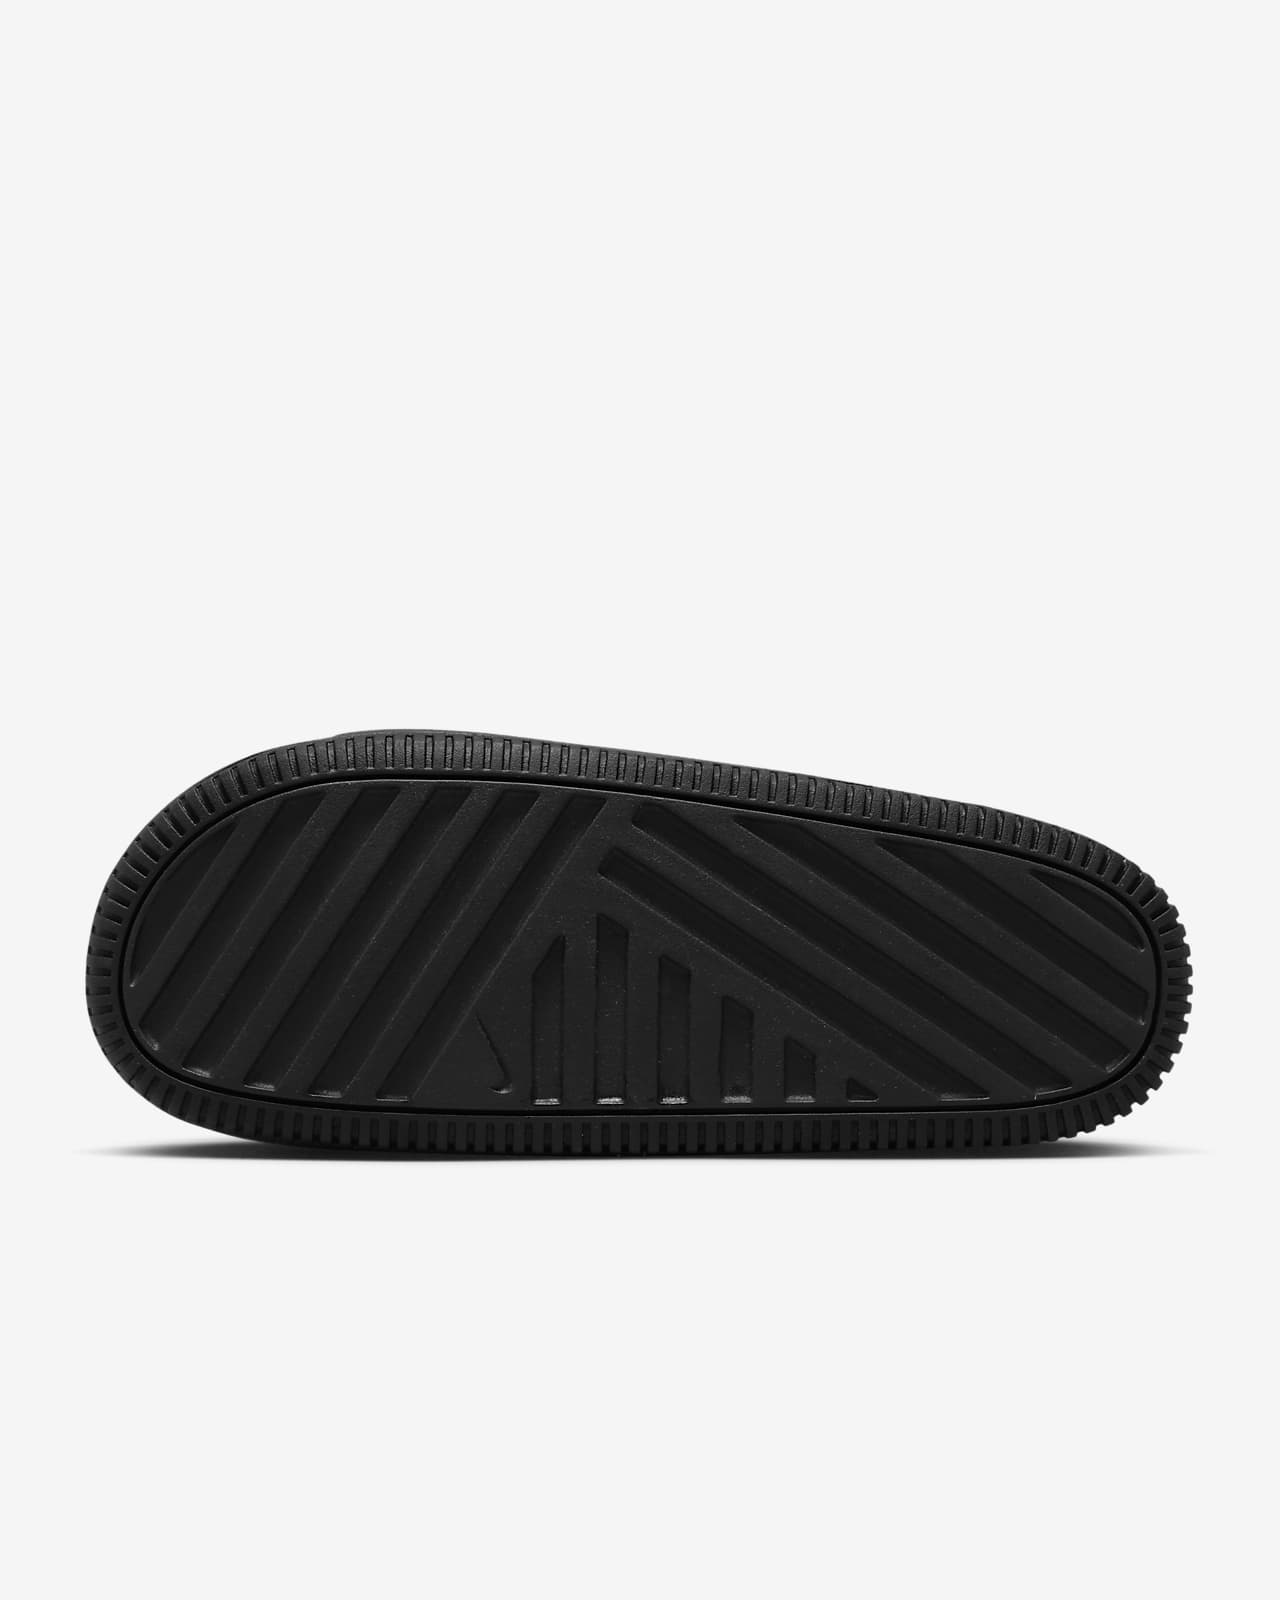 27cm Nike Calm Slide Black ナイキ カームスライド